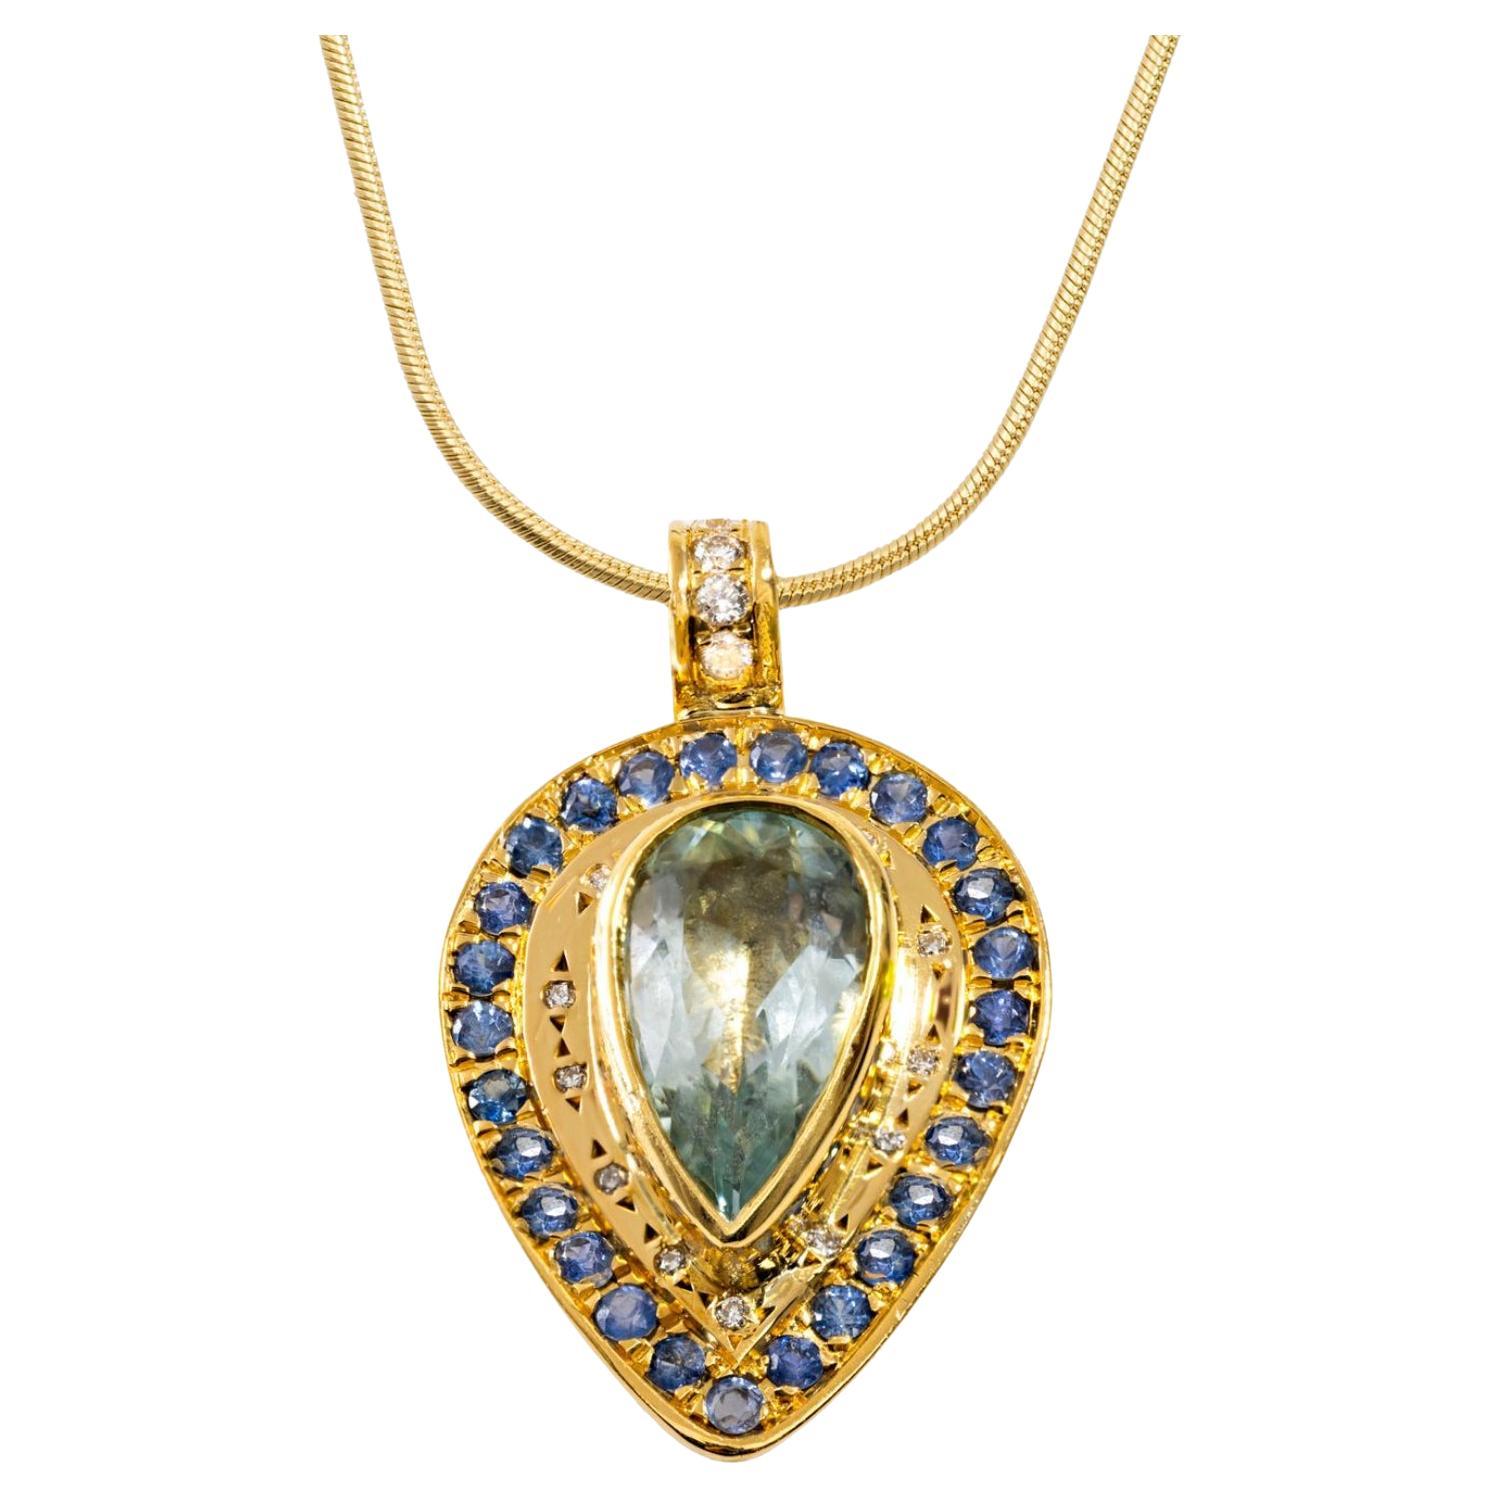 Paris & Lily, Handmade, 22k Gold, Aquamarine, Sapphire and Diamond Pendant